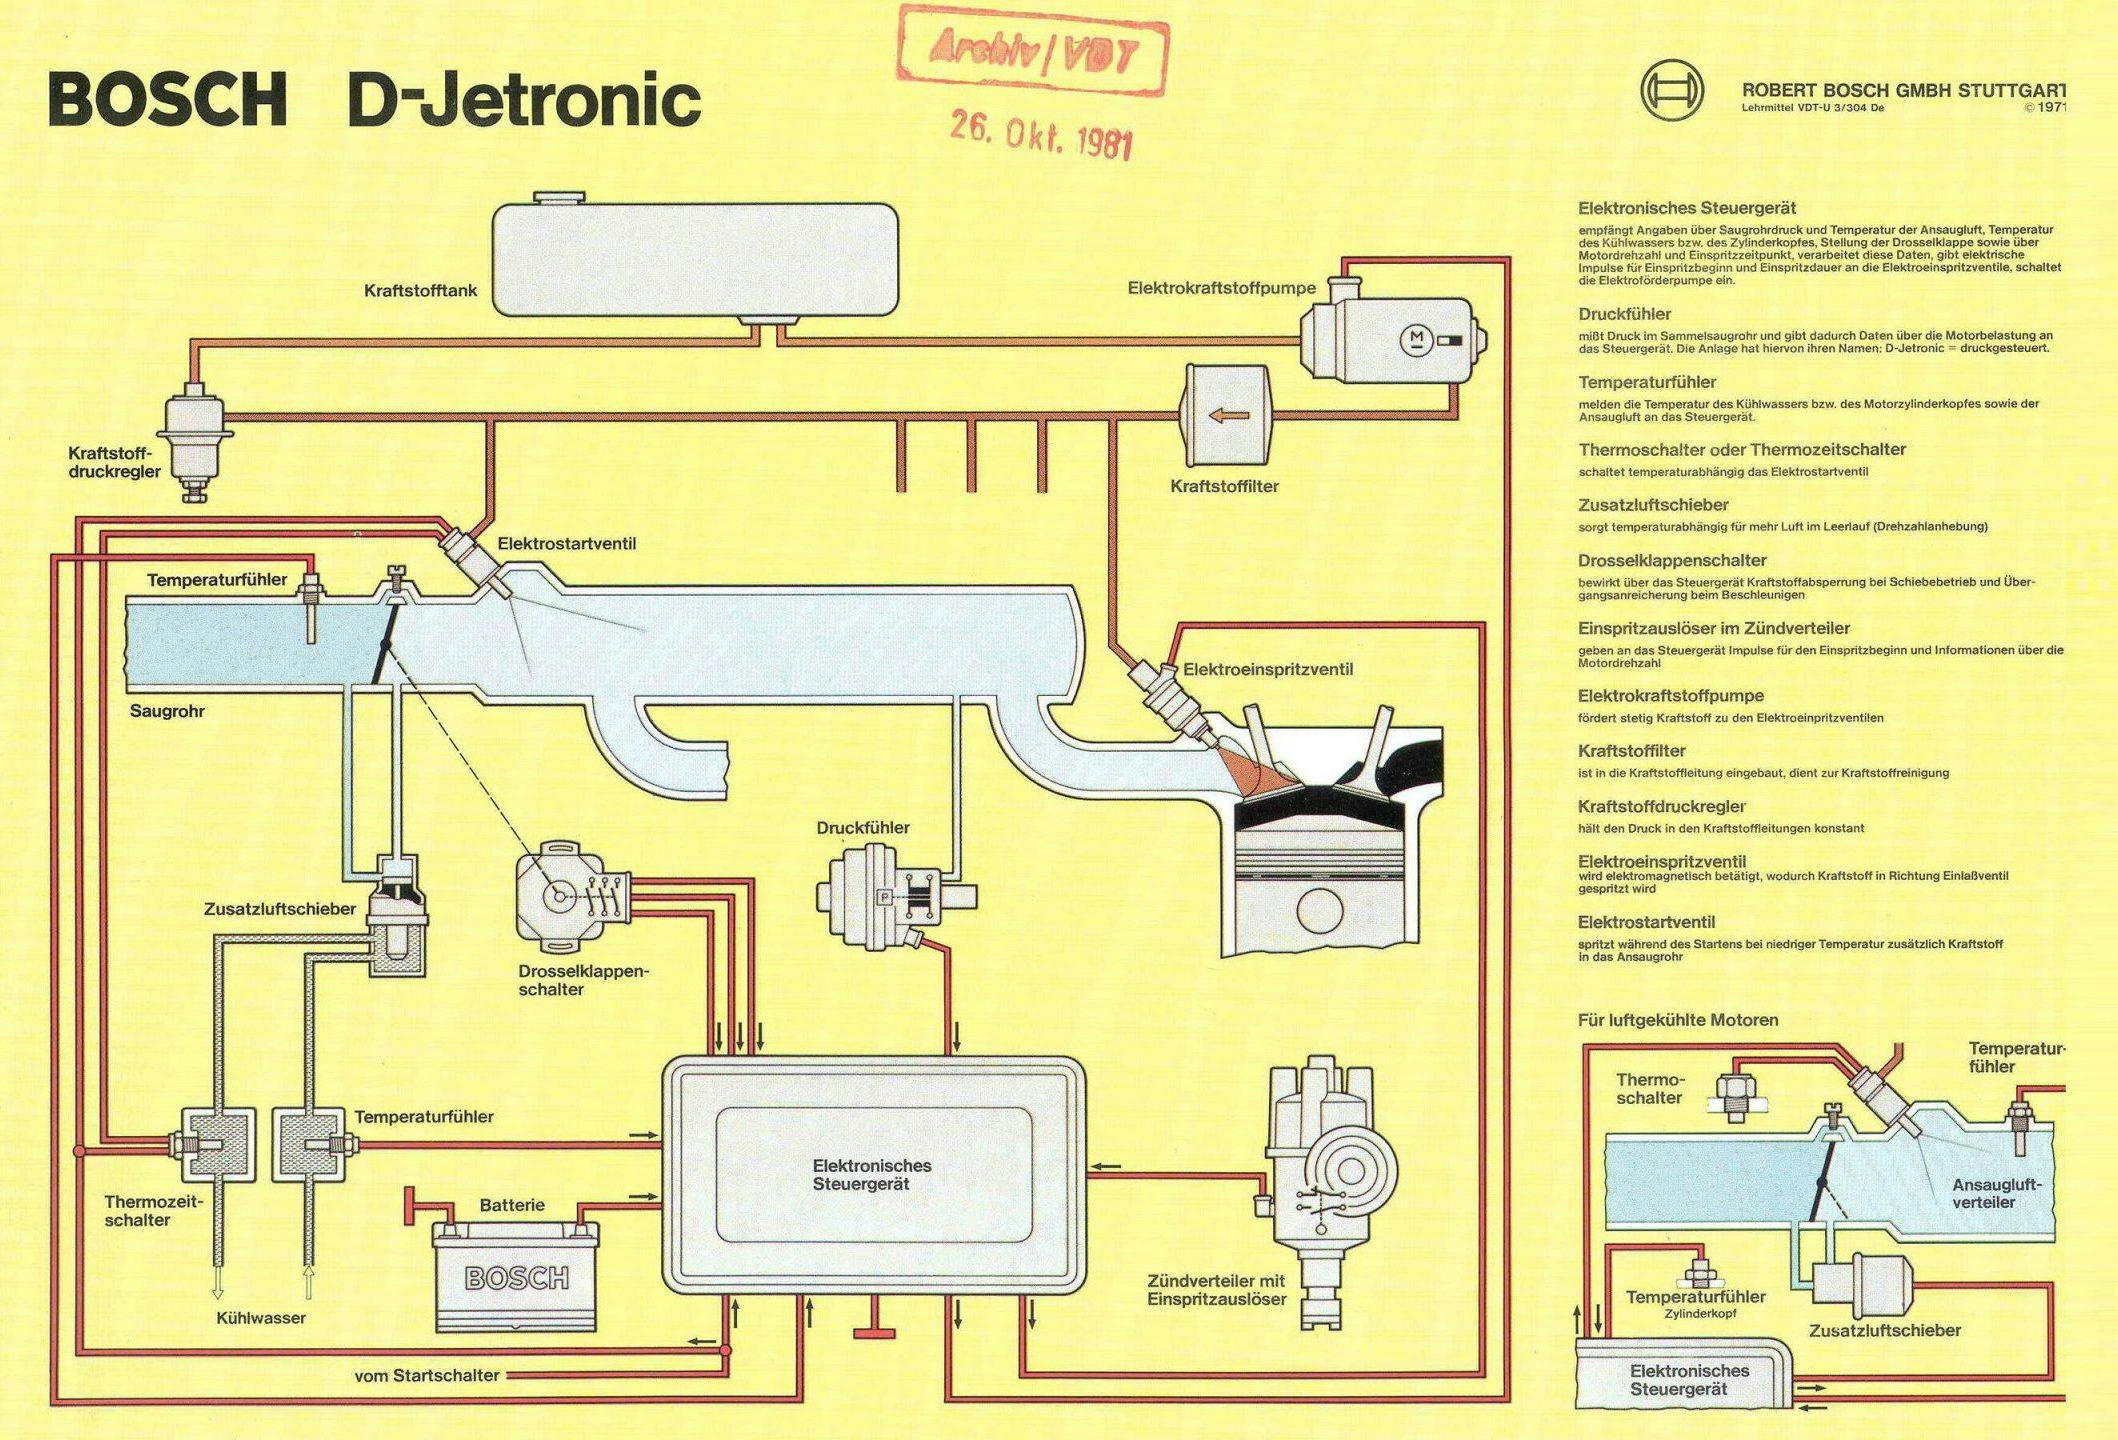 Bosch-D-Jetronic-Infographic-Diagram